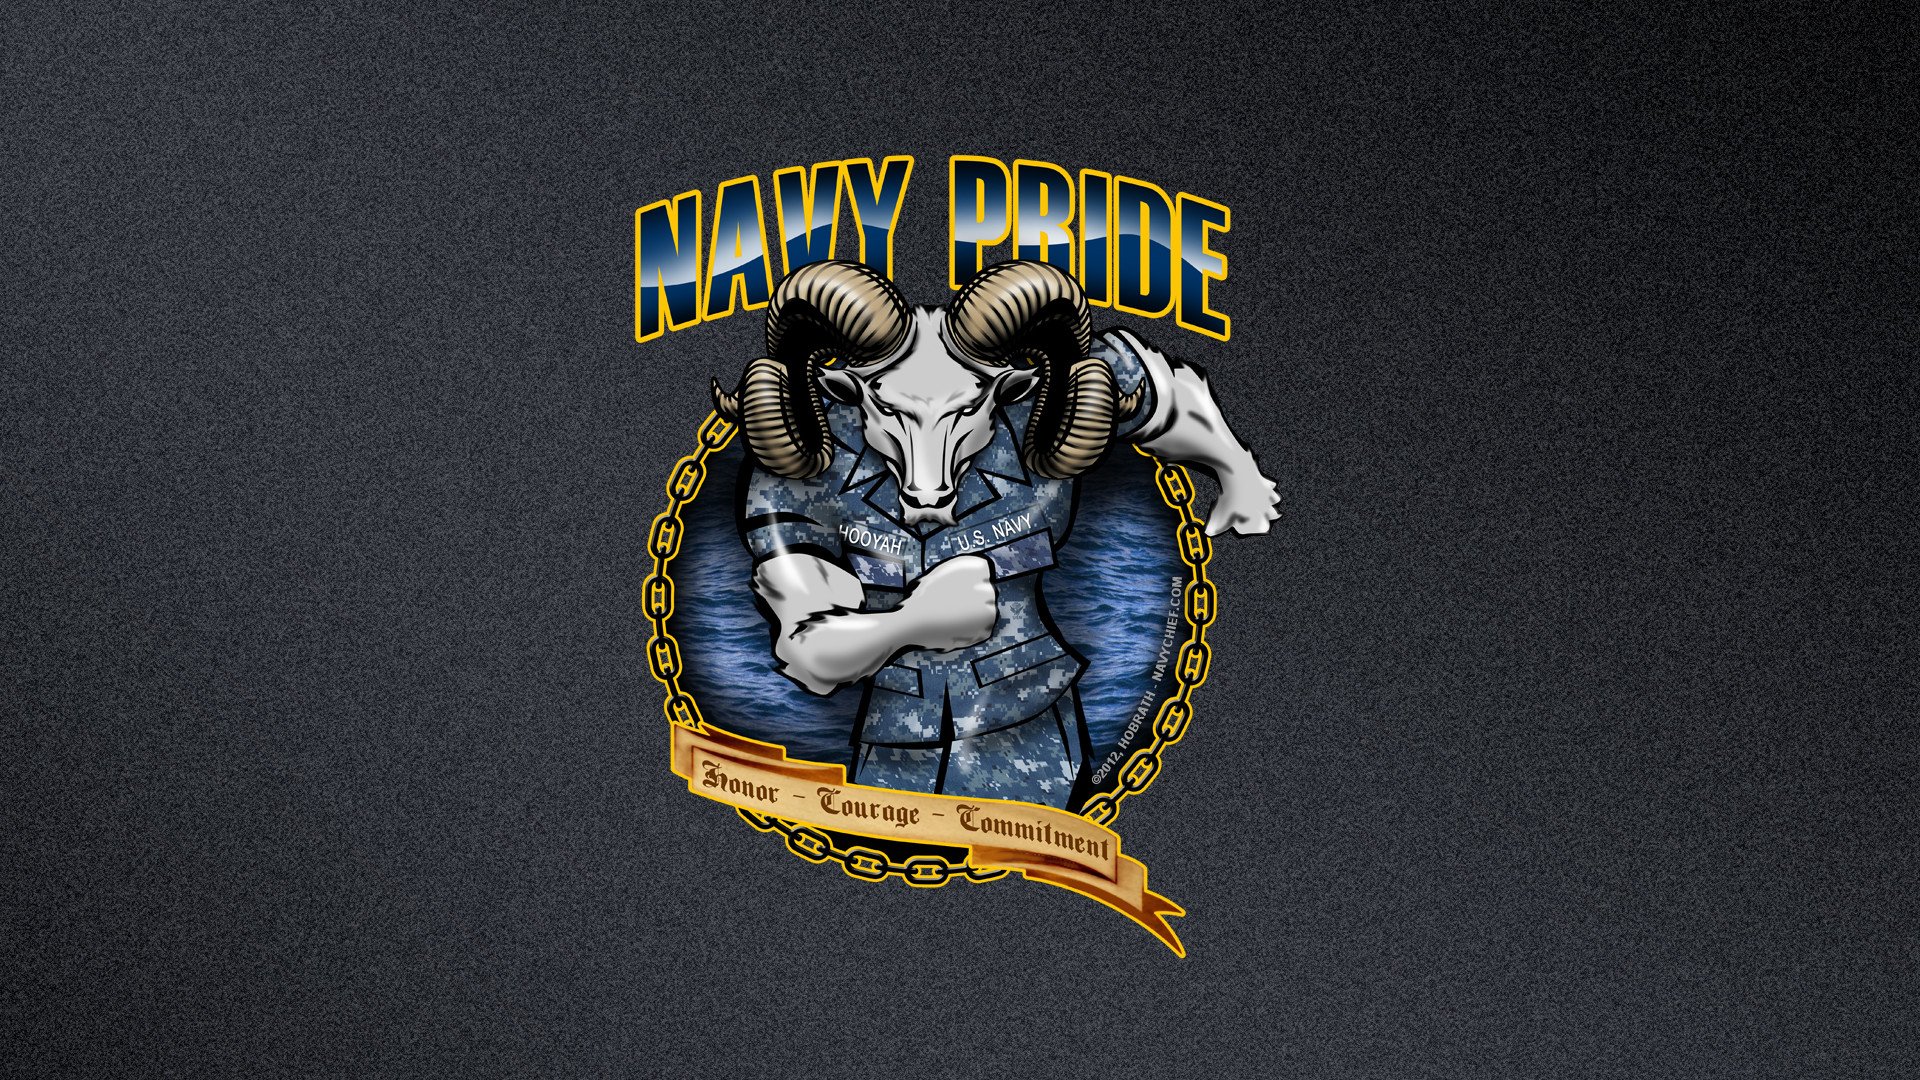 Navy Seal Logo Wallpaper 61 images